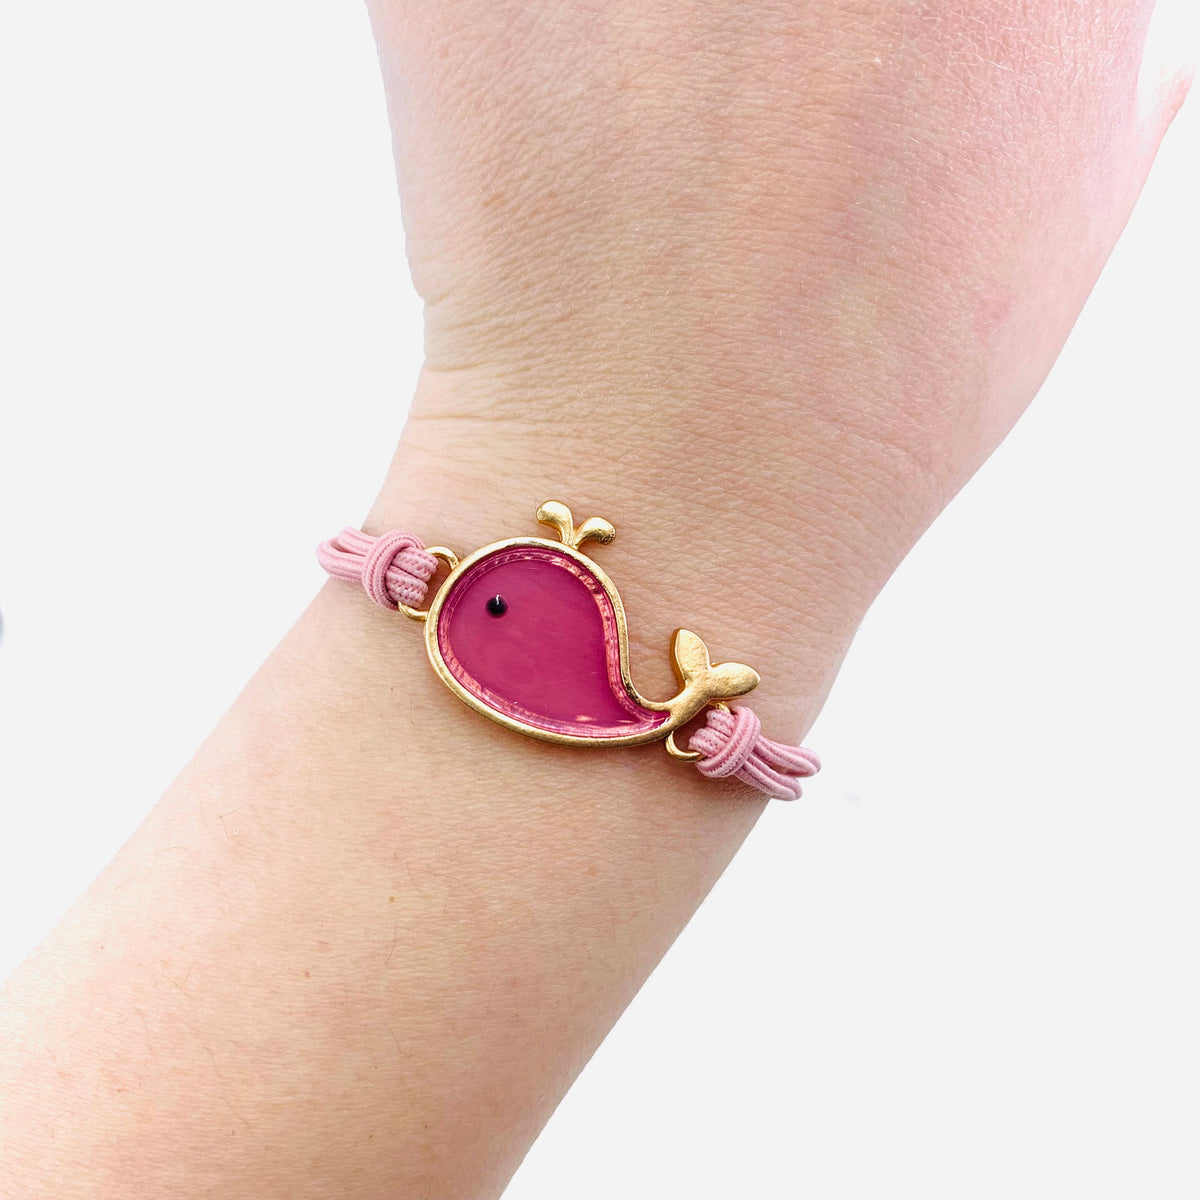 Baby Whale Bracelets Jewelry - Pink 